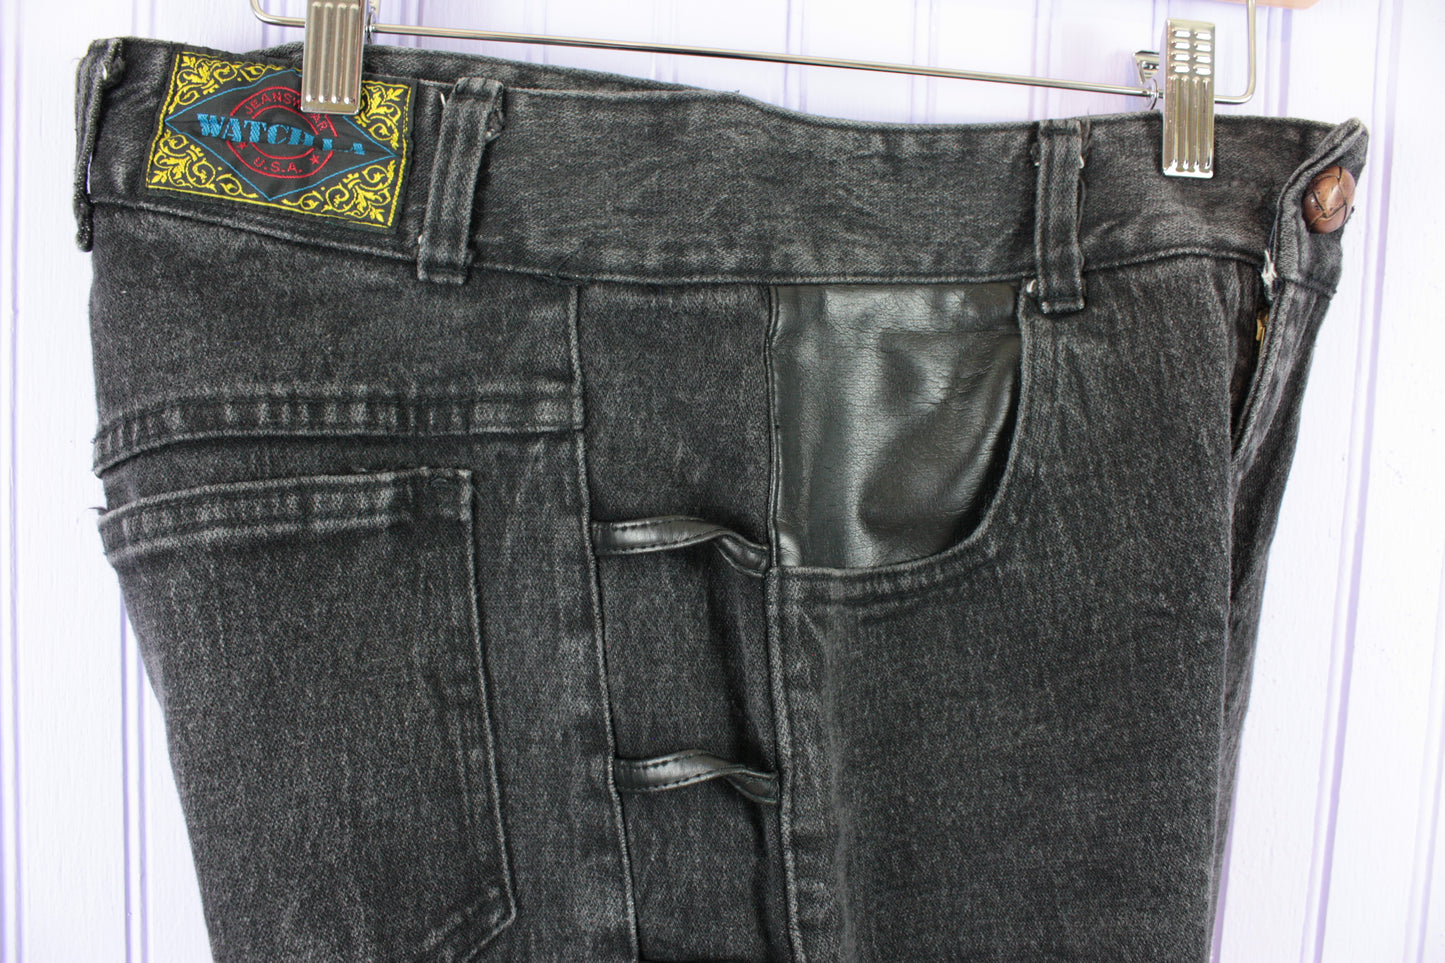 Black Denim & Leather Jeans by Watch L.A.